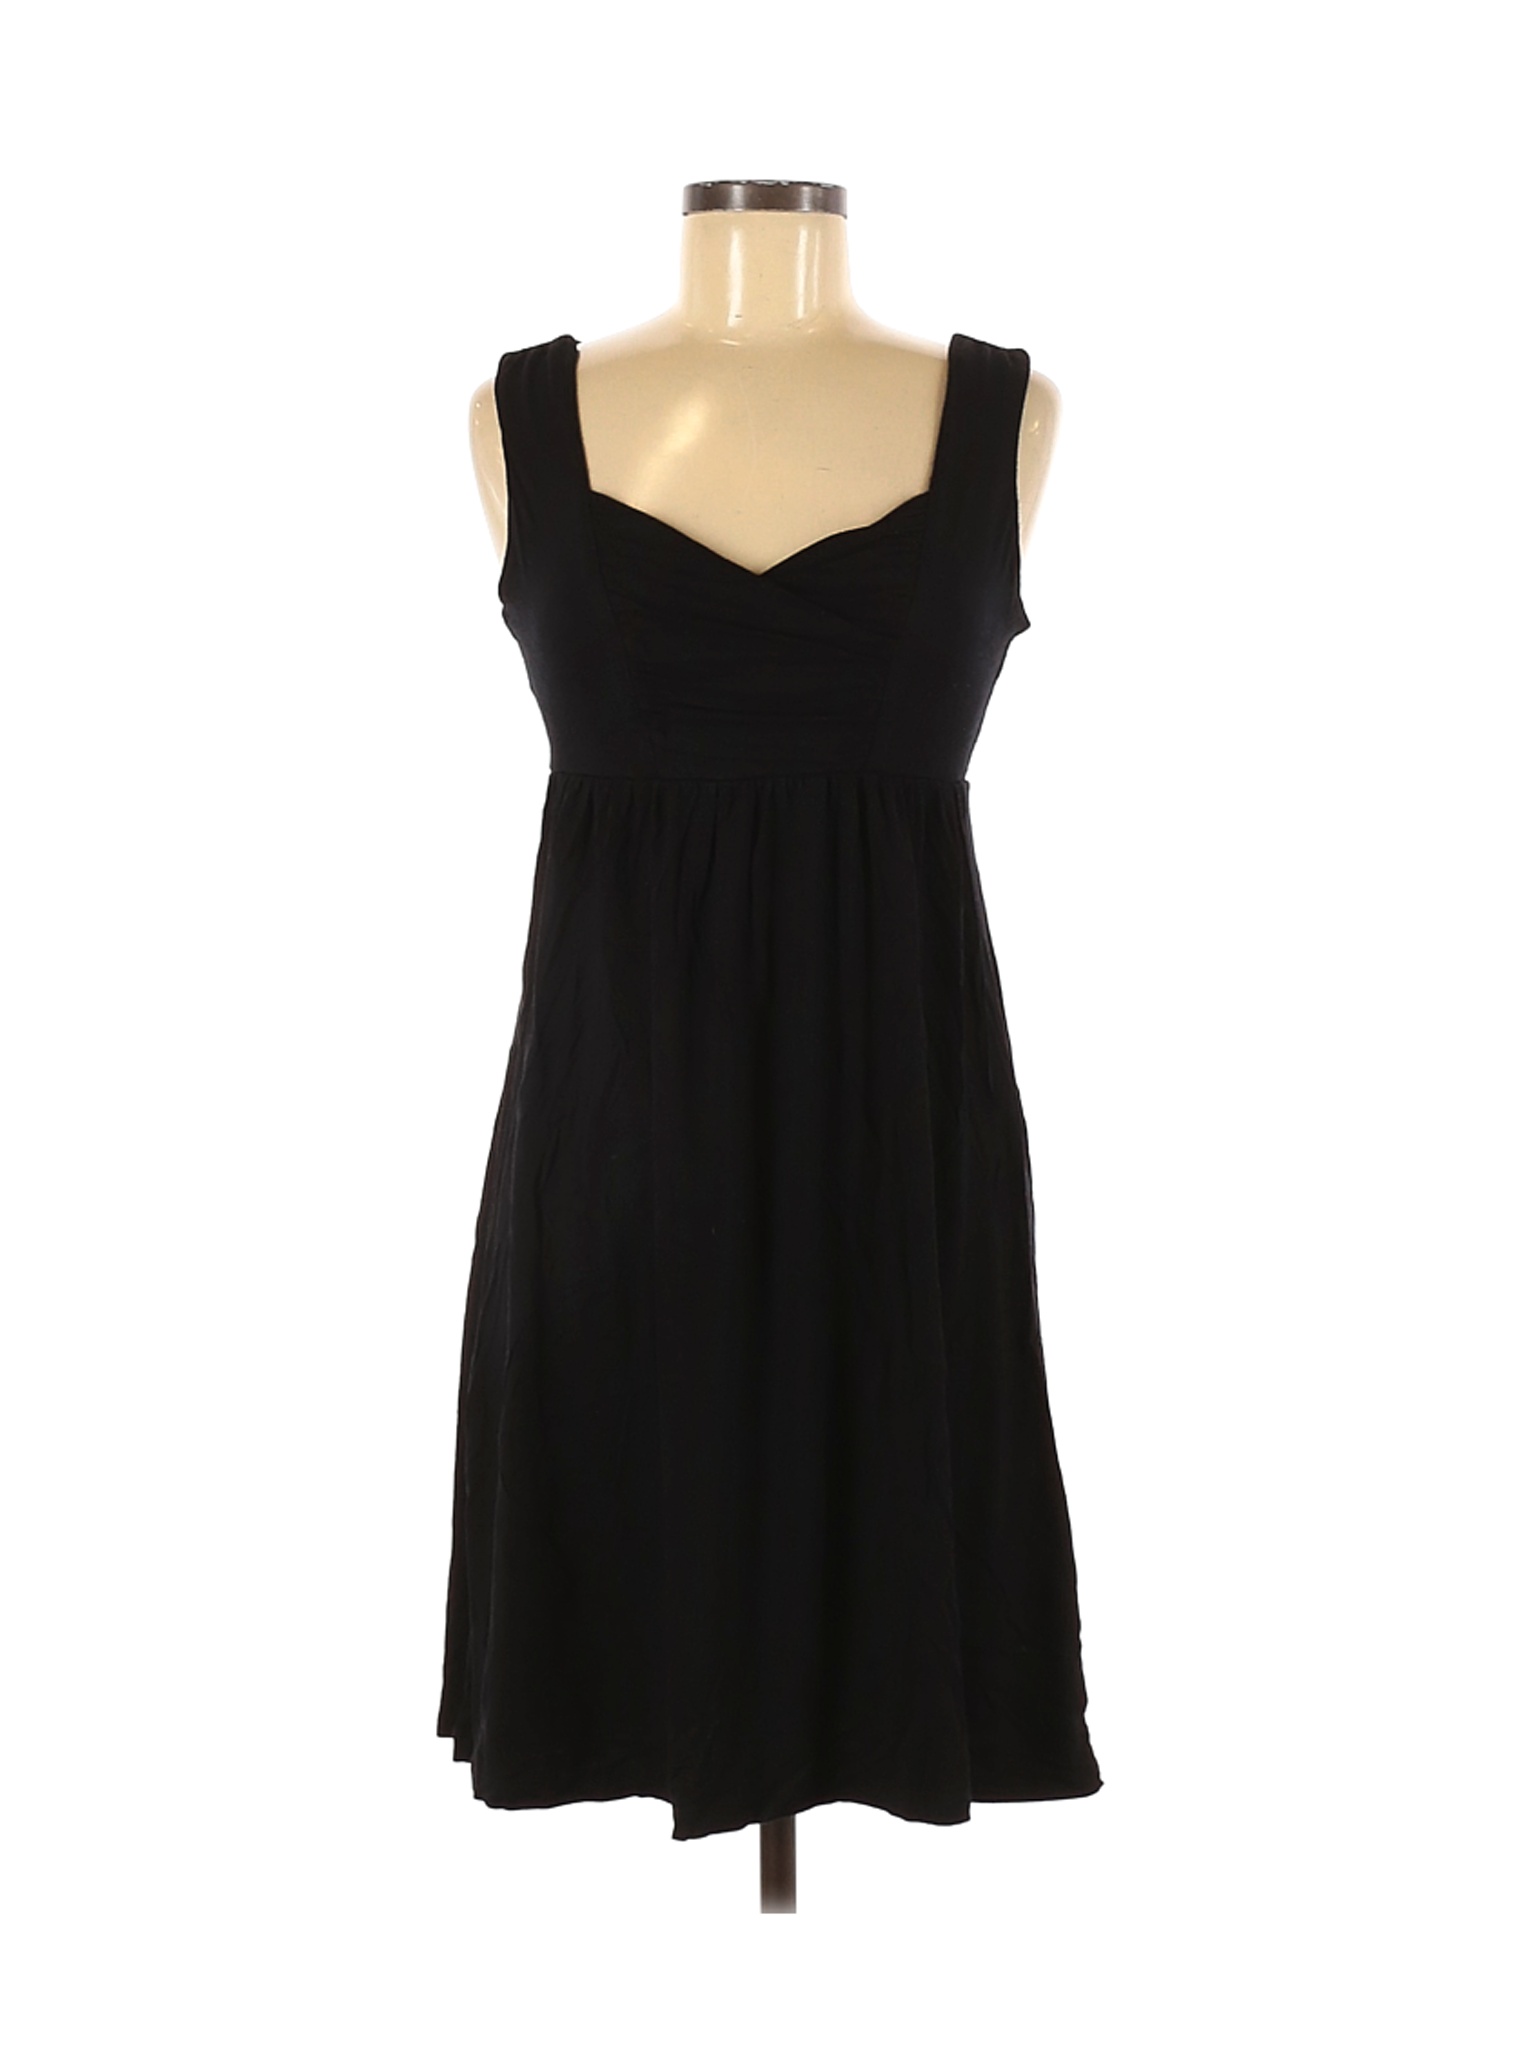 Saint Tropez West Women Black Casual Dress M | eBay